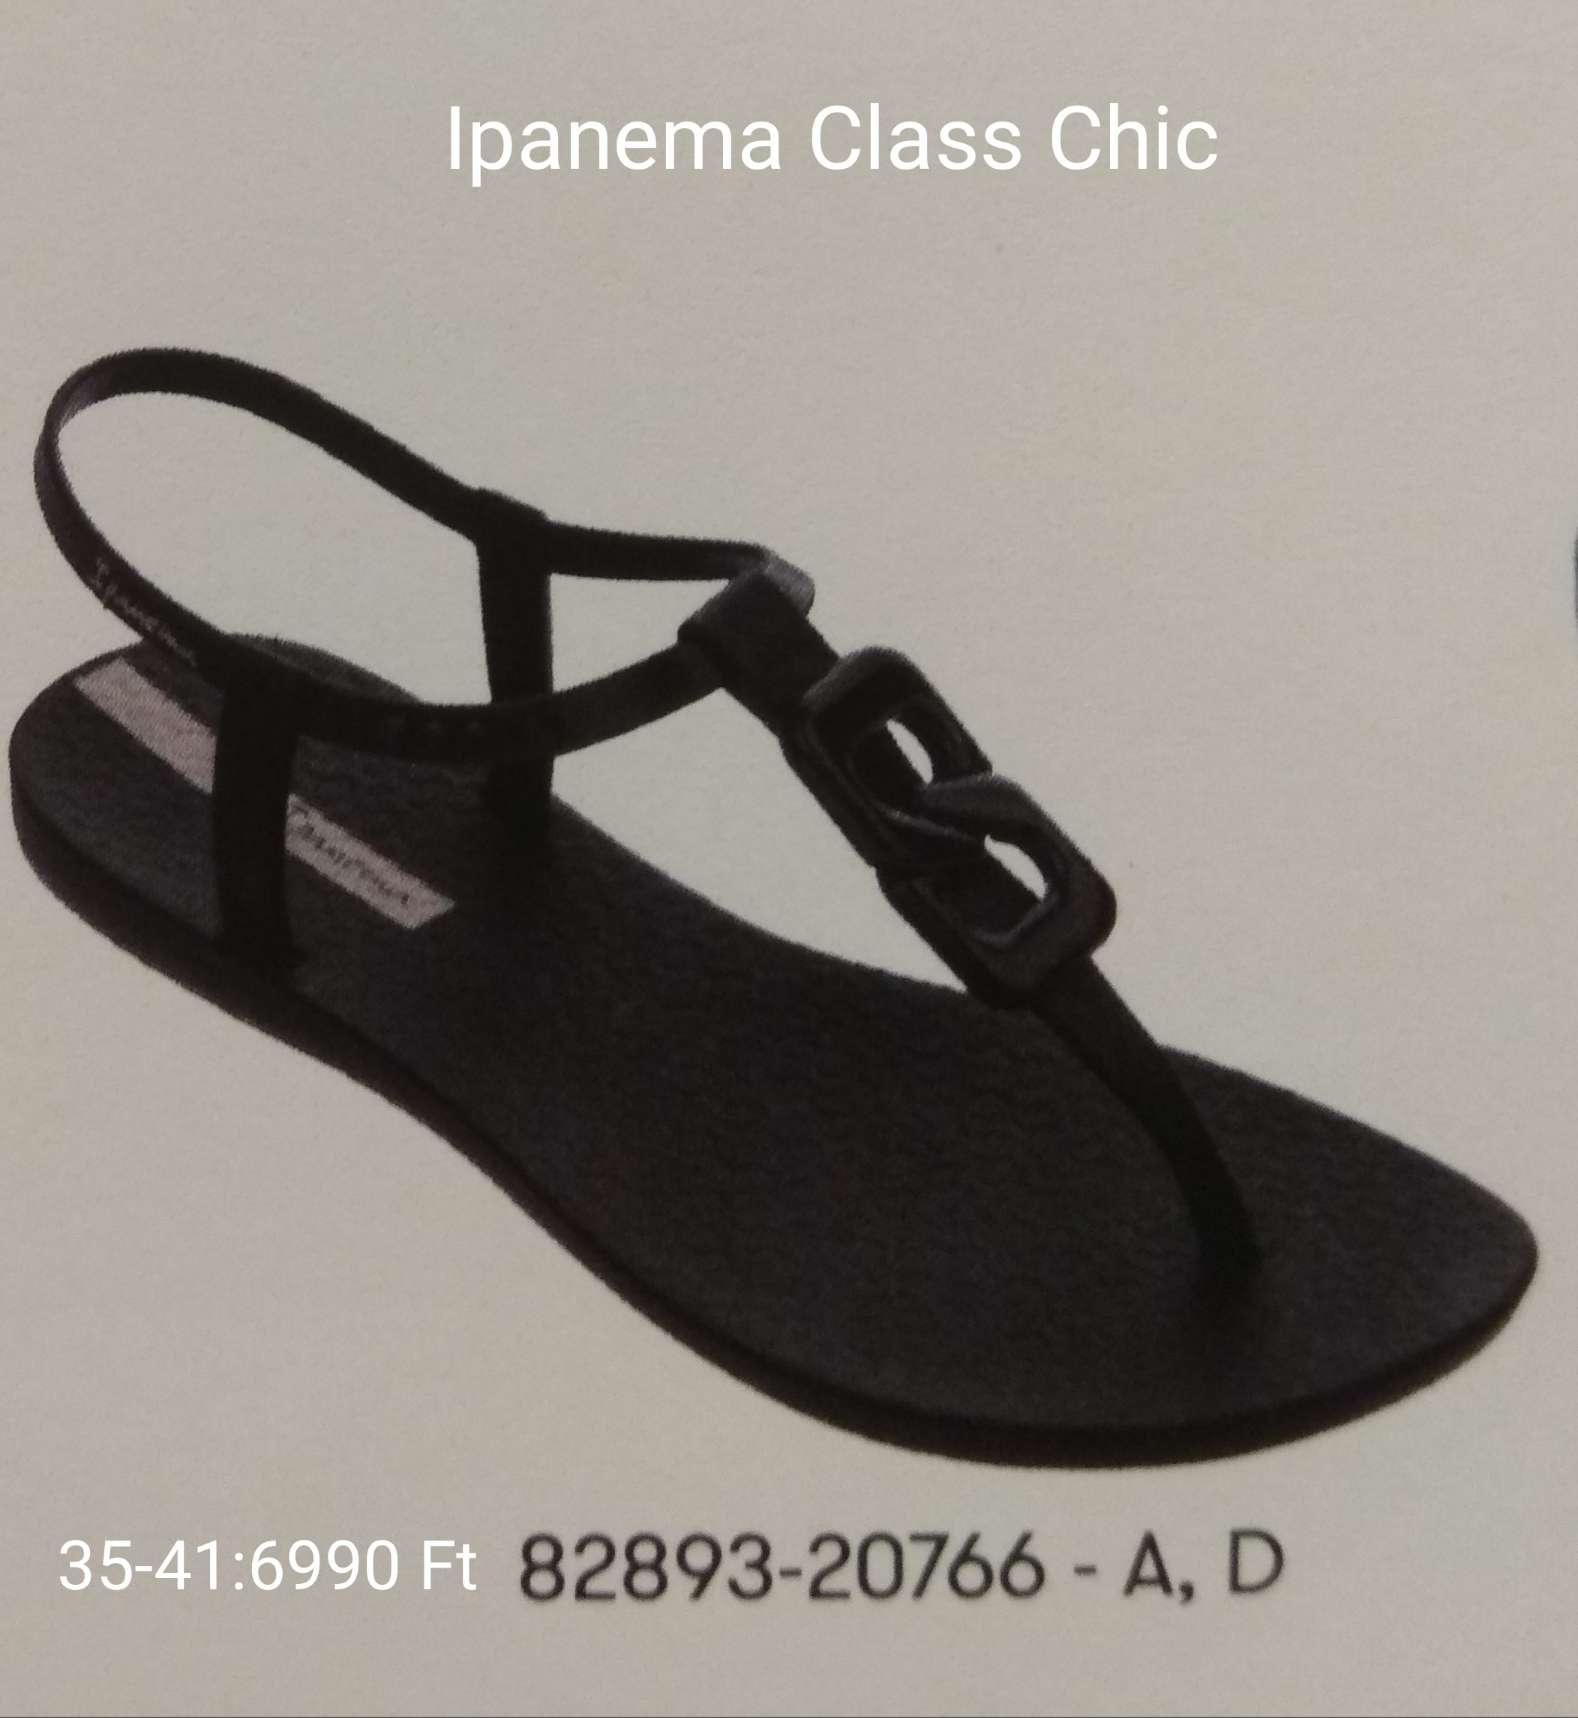 Ipanema Class Chic